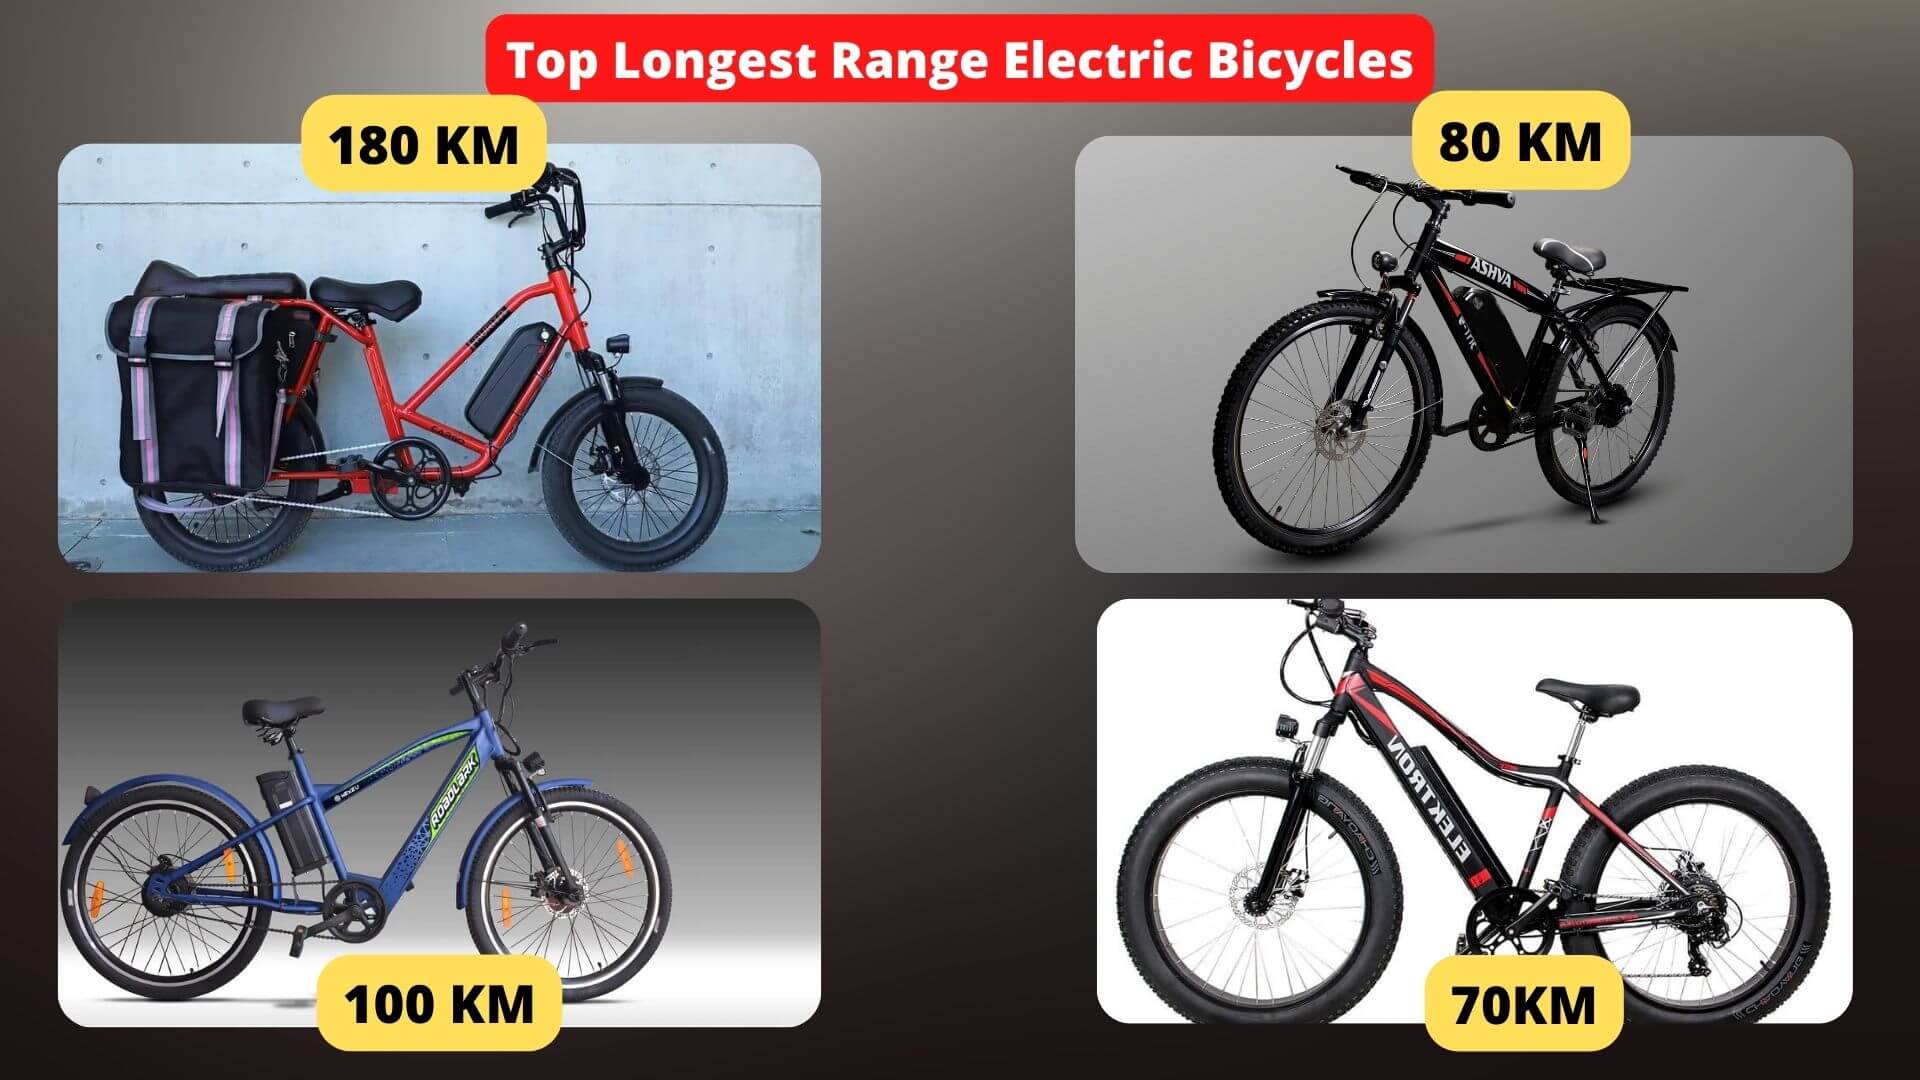 https://e-vehicleinfo.com/10-longest-range-electric-bicycles/